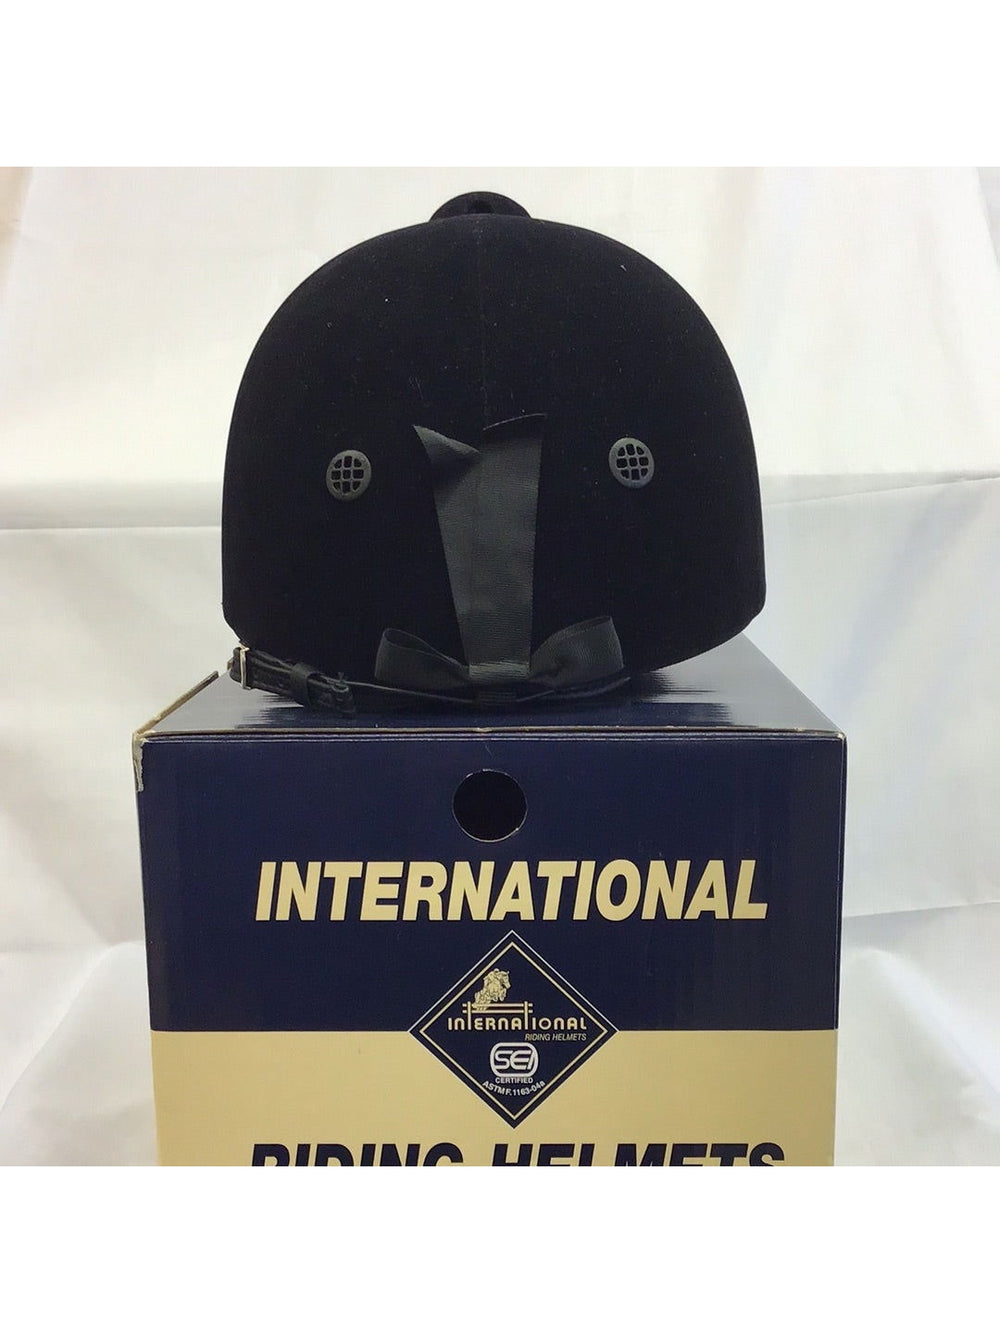 International Riding Helmets Medalist Helmet 7 3/8 - The Kennedy Collective Thrift - 